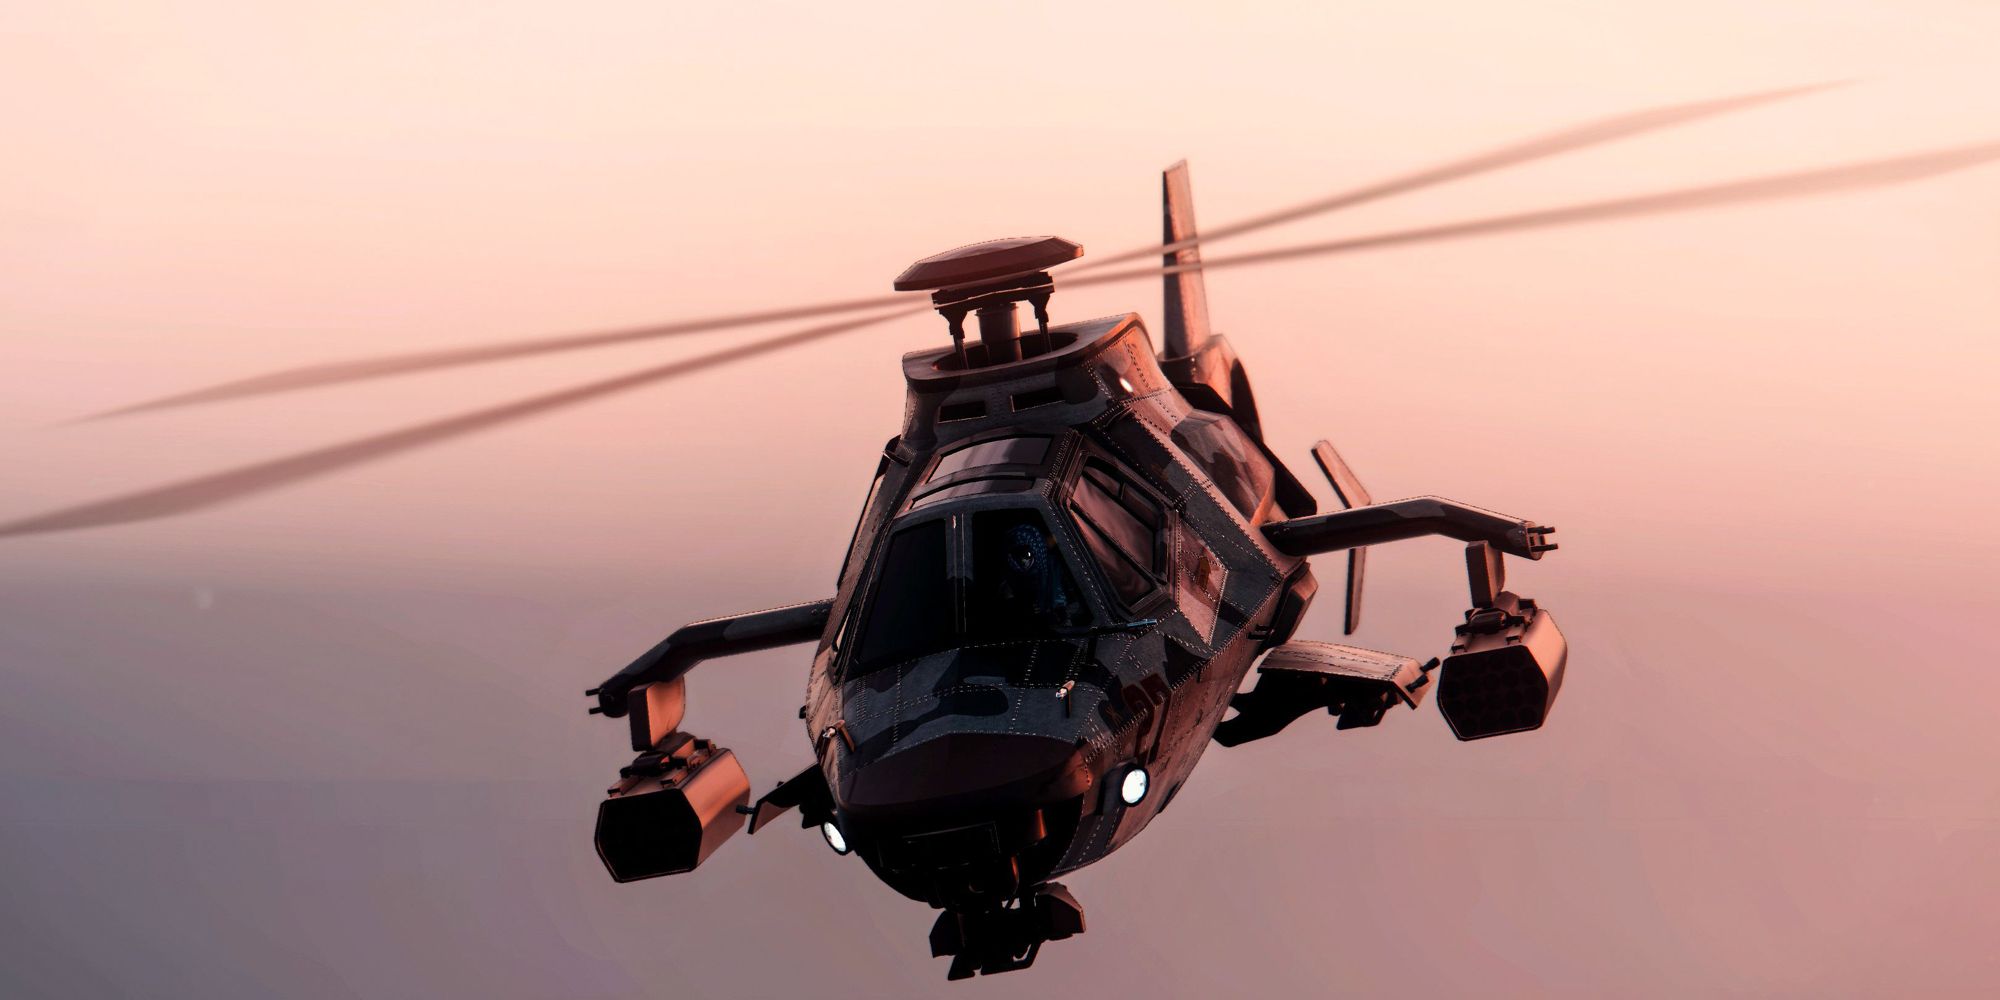 Akula Helicopter in GTA Online flies through hazy sky